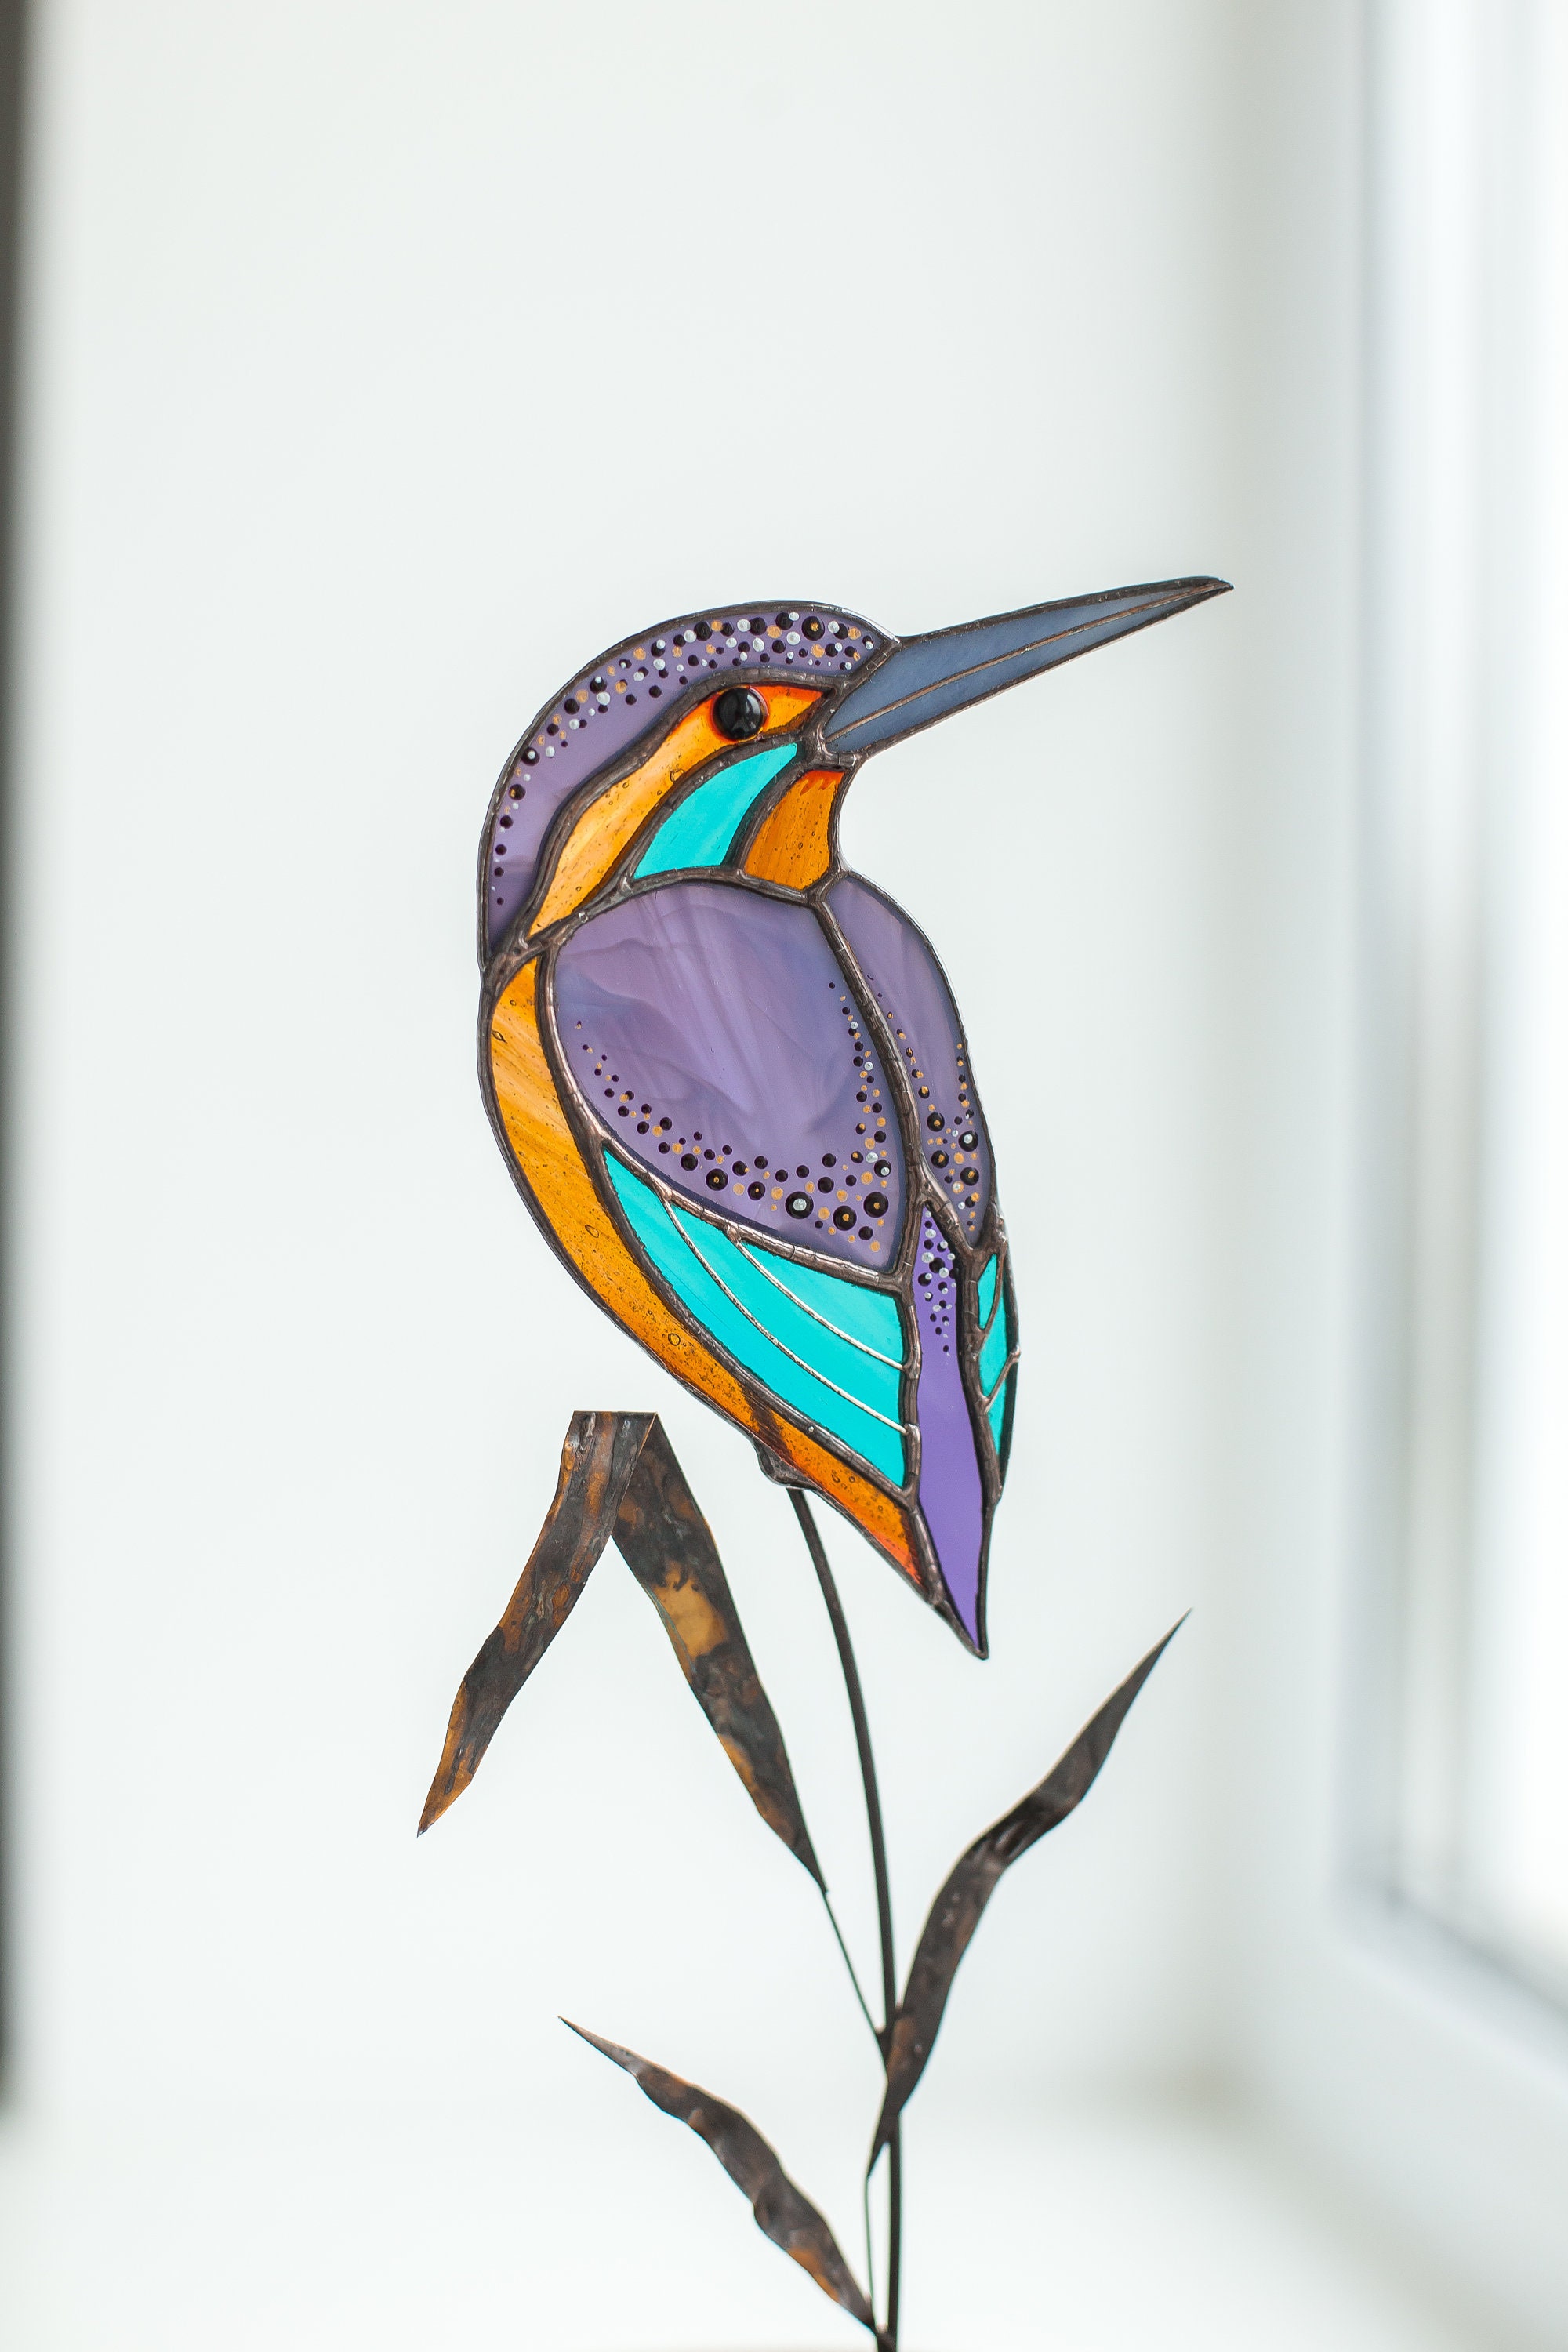 Handmade Stained Glass Bird Suncatcher - 5 Color Options -Standing Bird  Decor for Windowsill, Desk